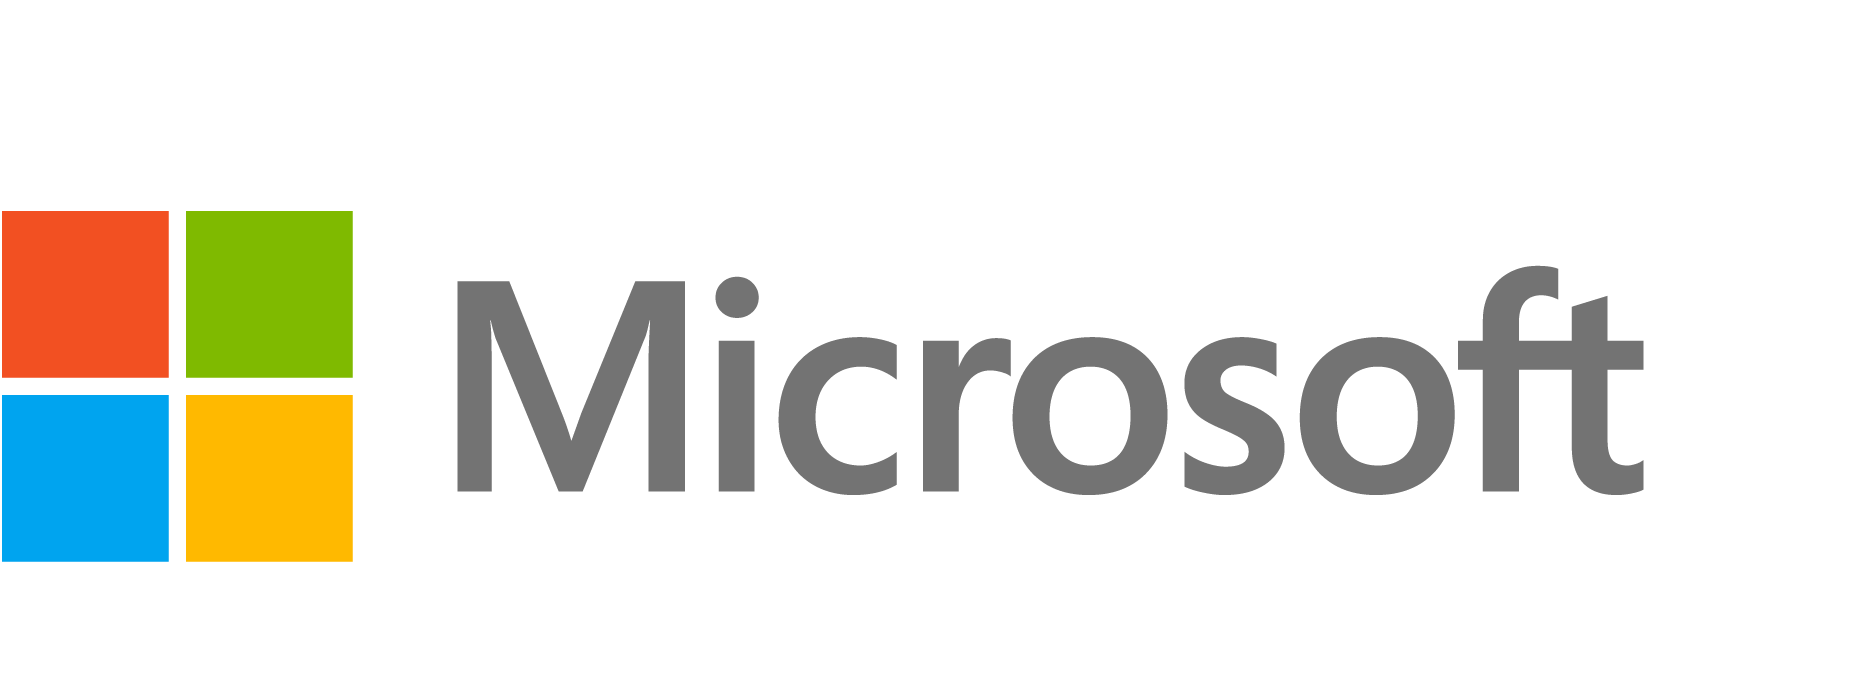 Microsoft-Logo-PNG VR AR Global Summit VRARA.png